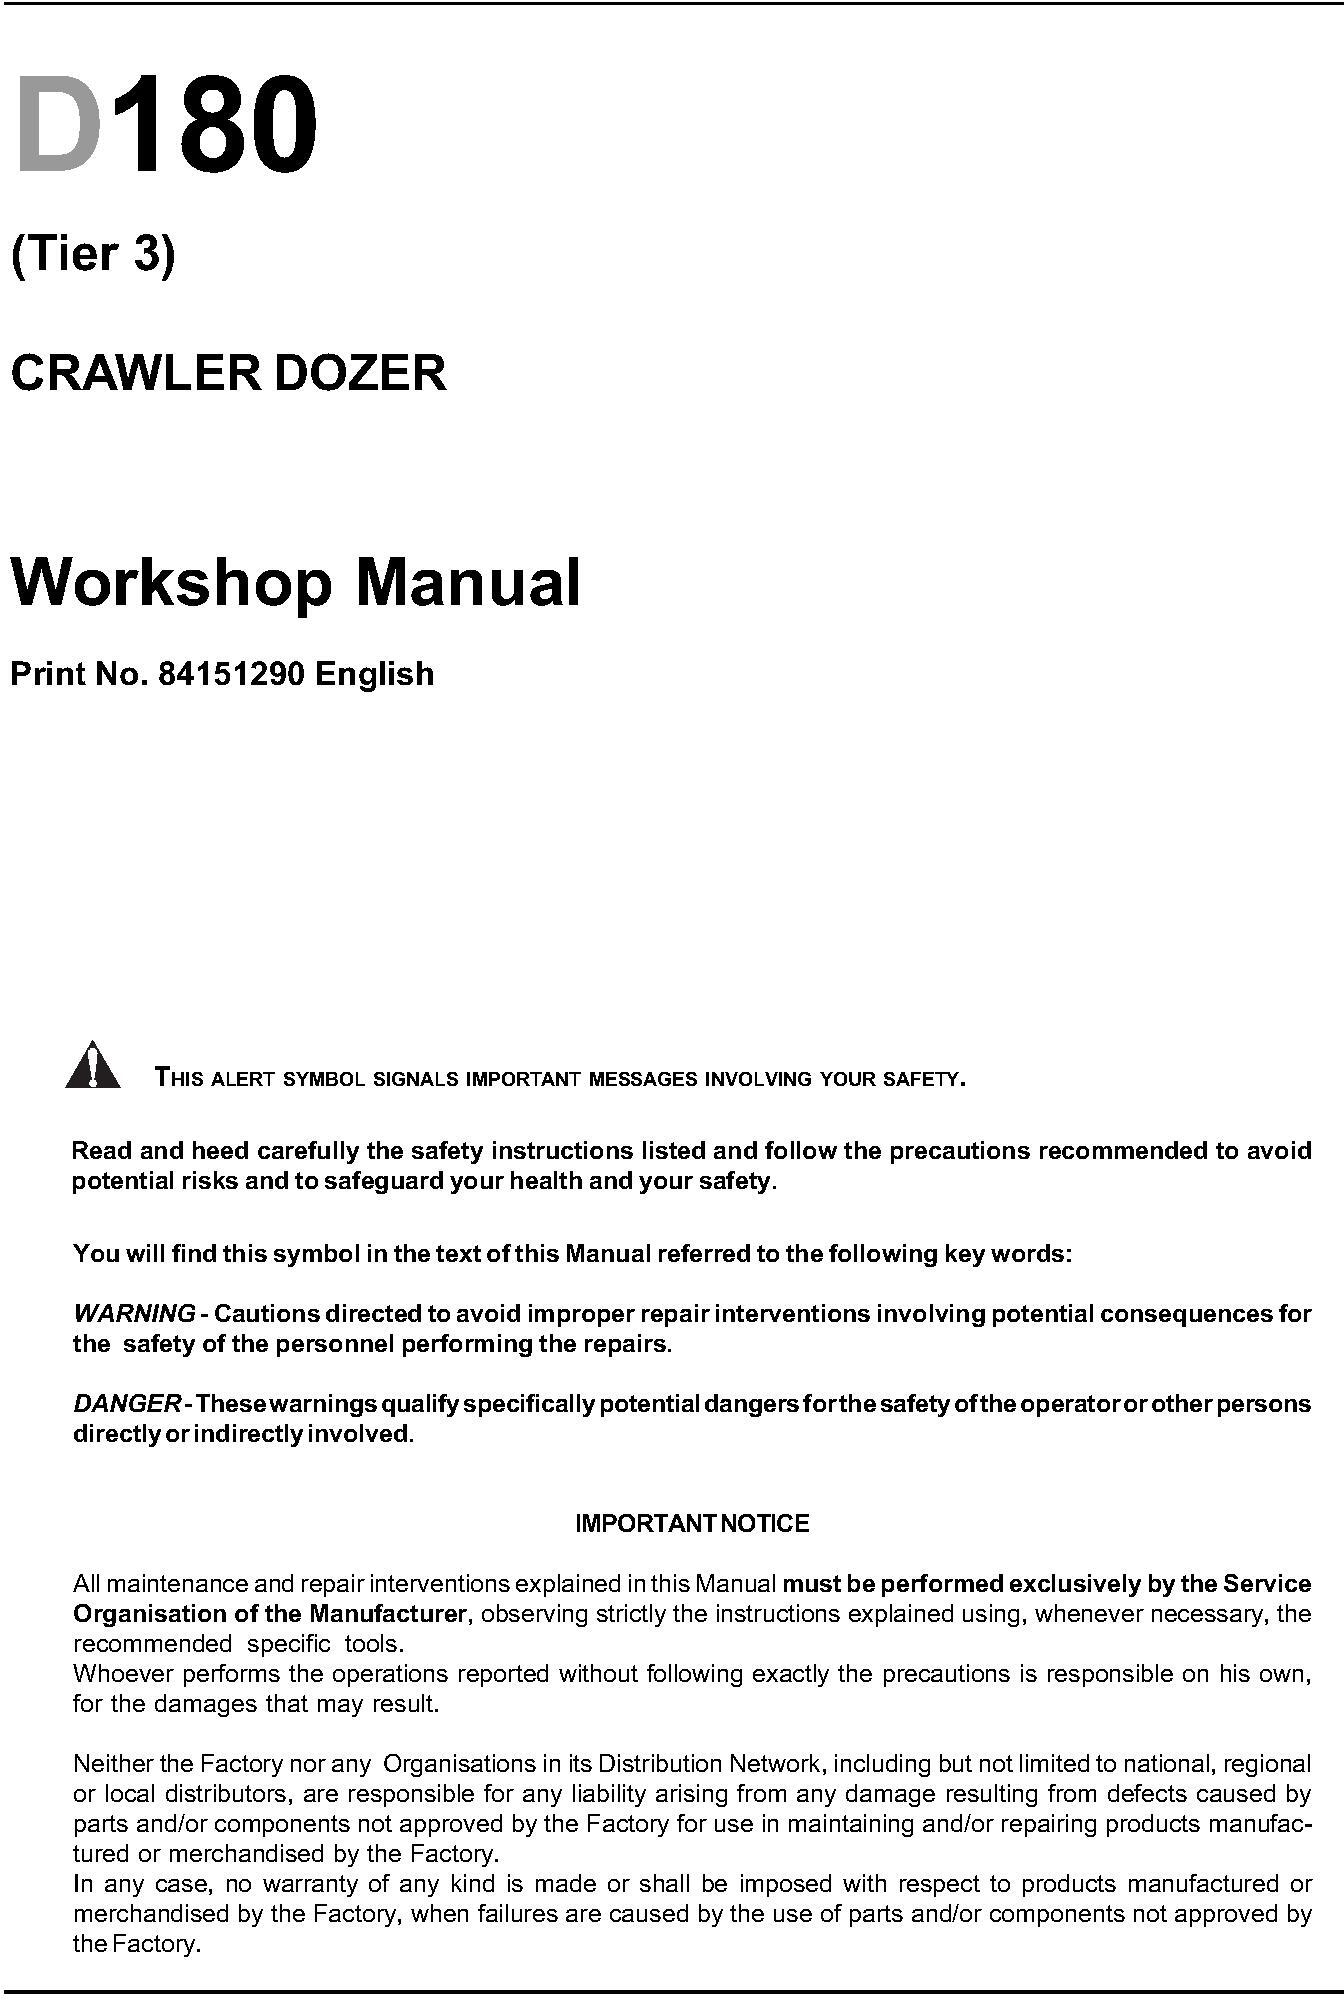 New Holland D180 Crawler Dozer Tier 3 Workshop Service Manual - 19981